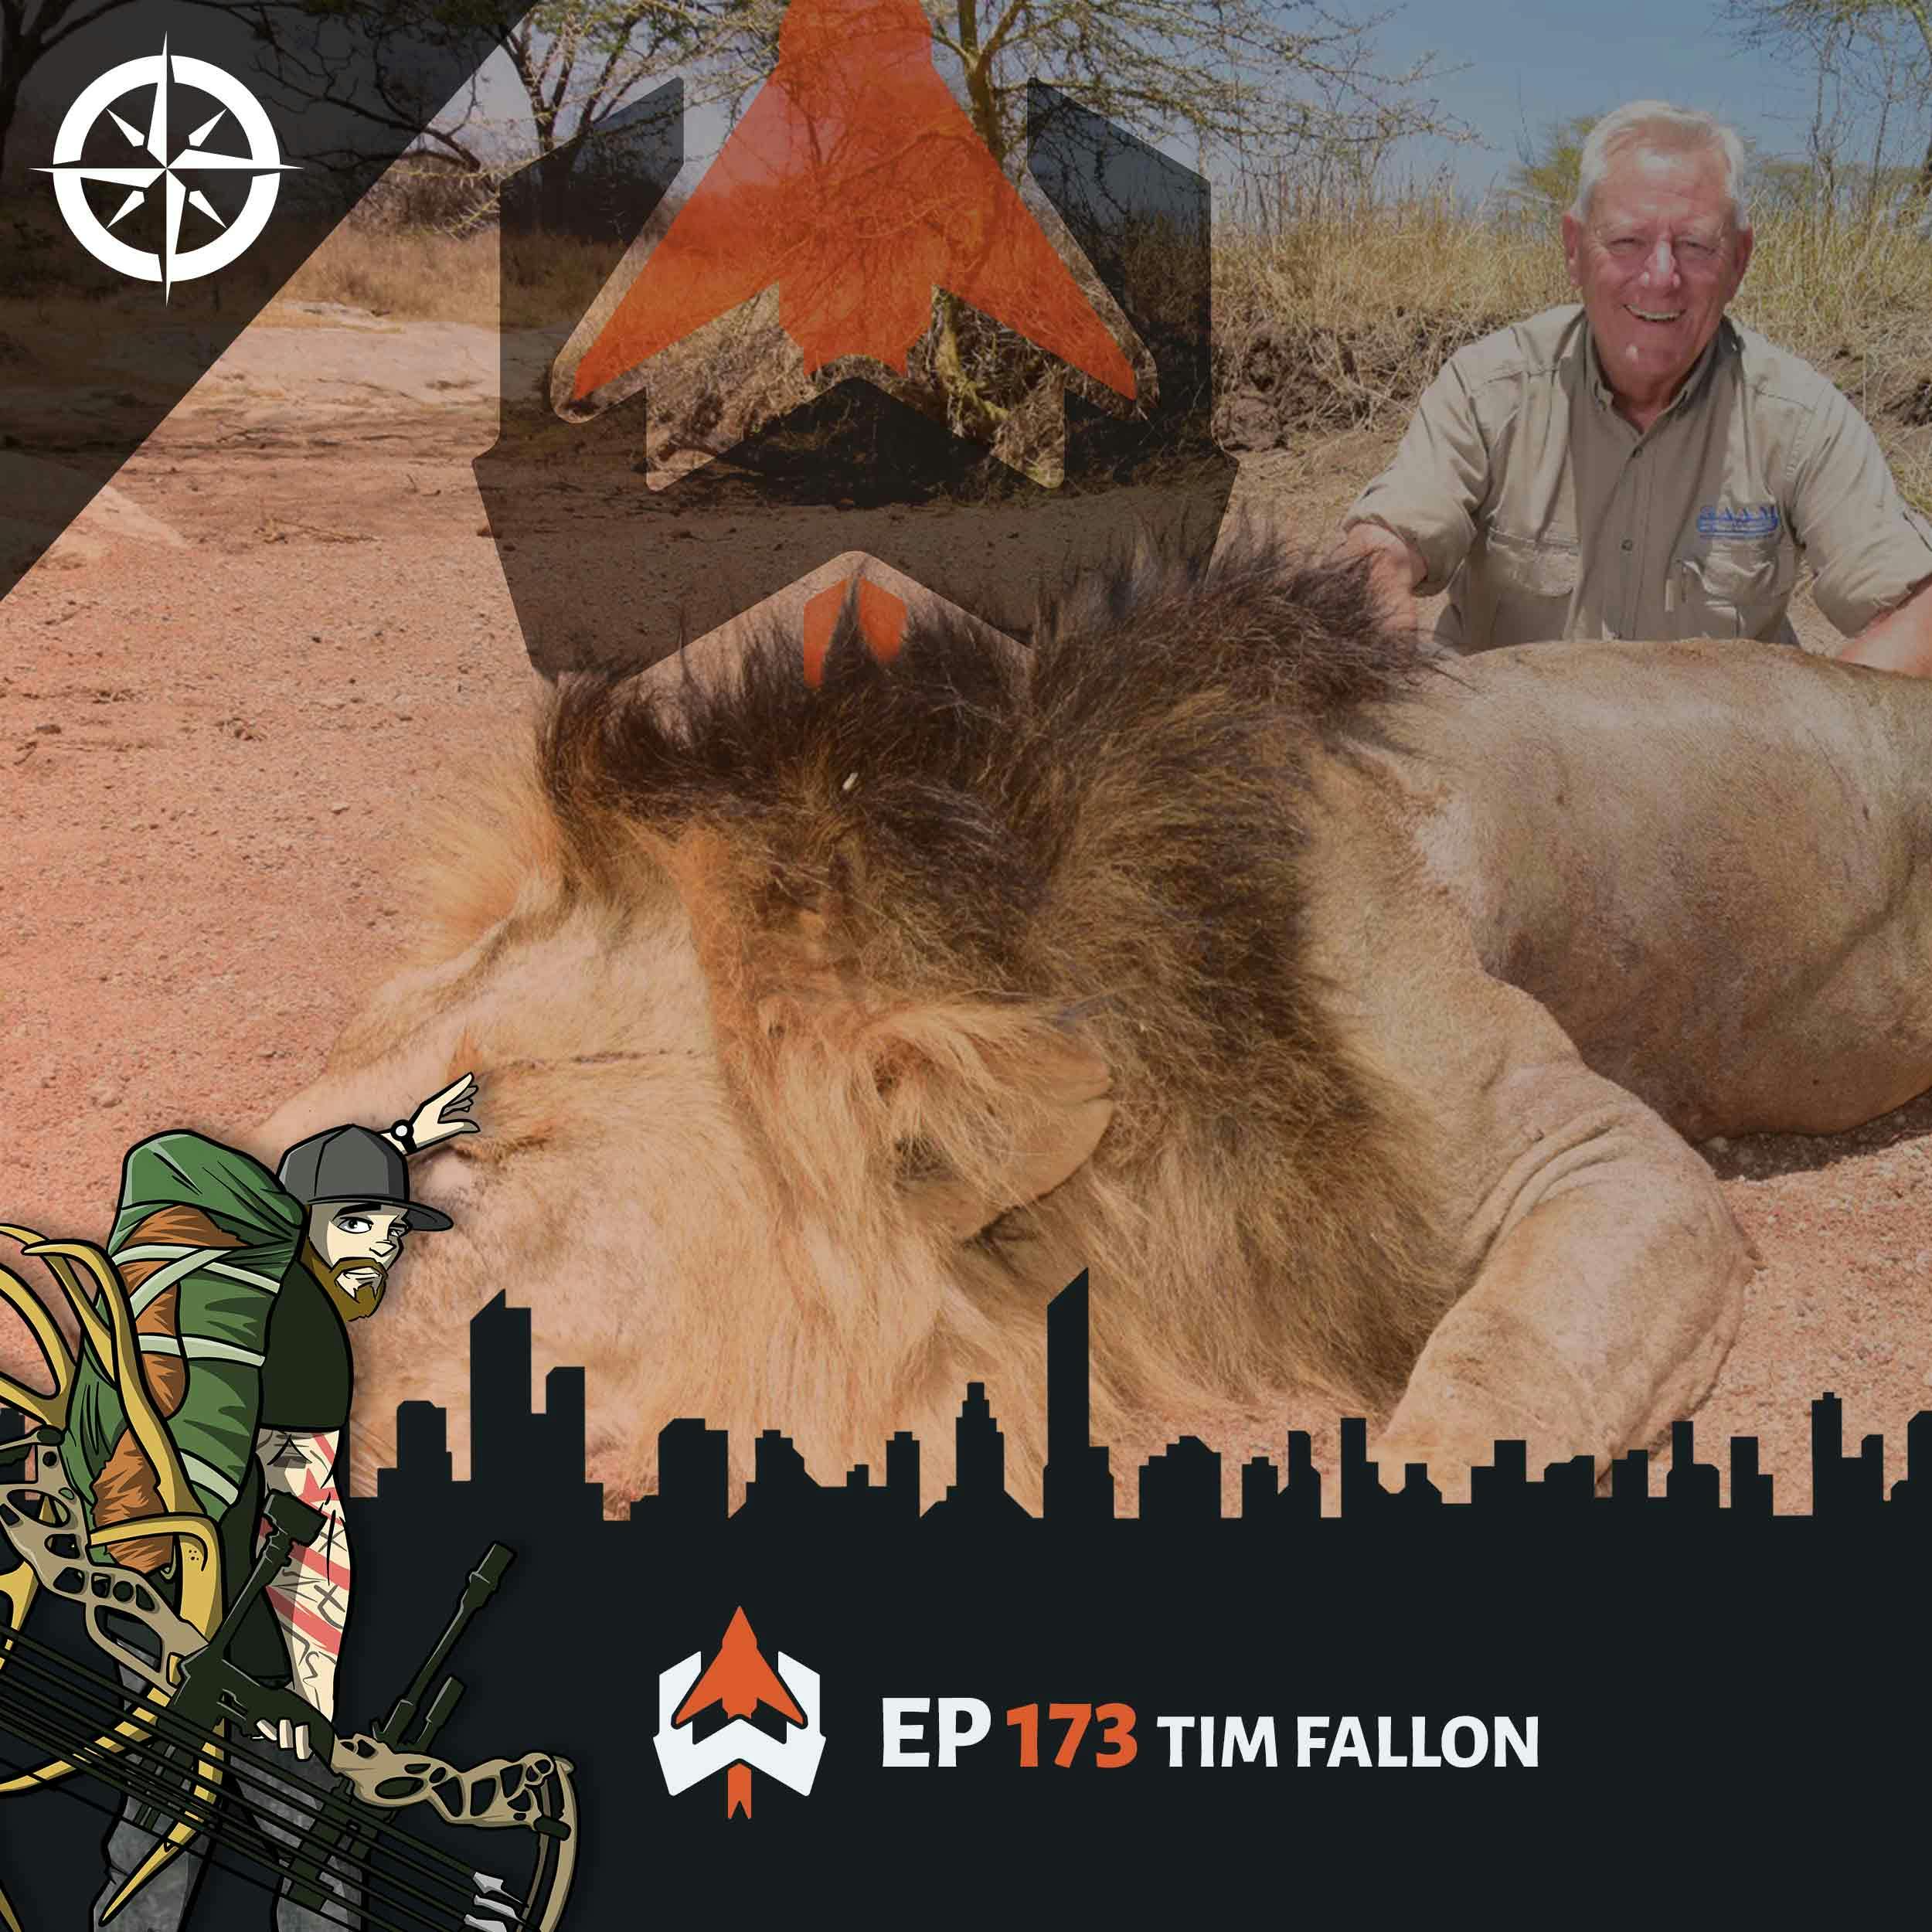 Ep 173 - Tim Fallon: Becoming an Effective, Ethical Hunter